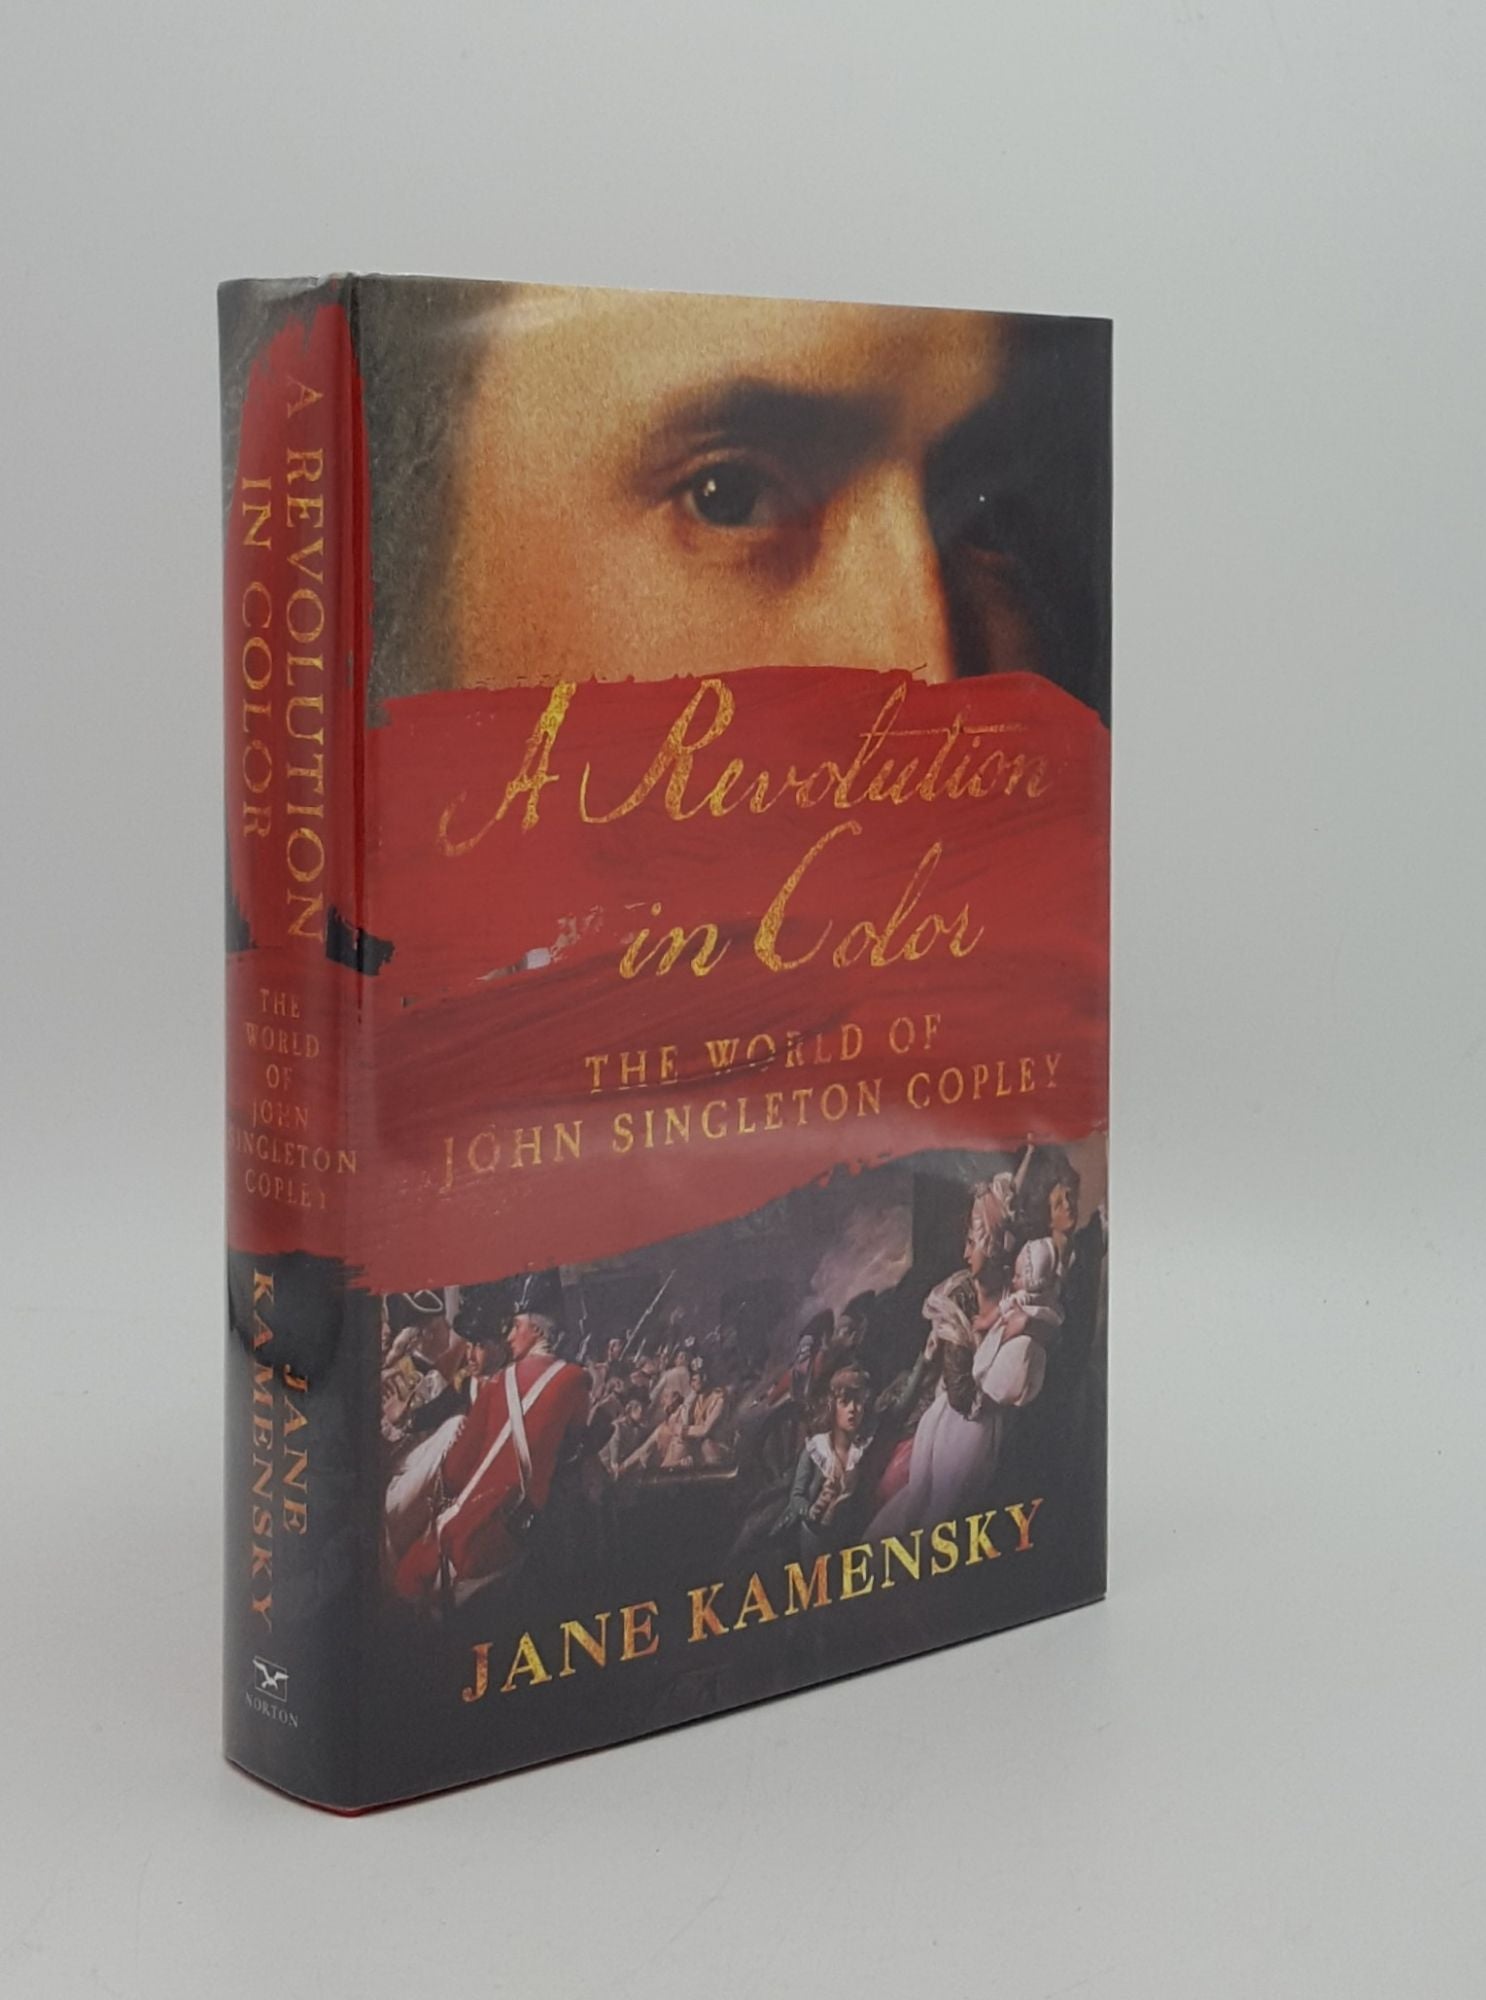 KAMENSKY Jane - A Revolution in Color the World of John Singleton Copley